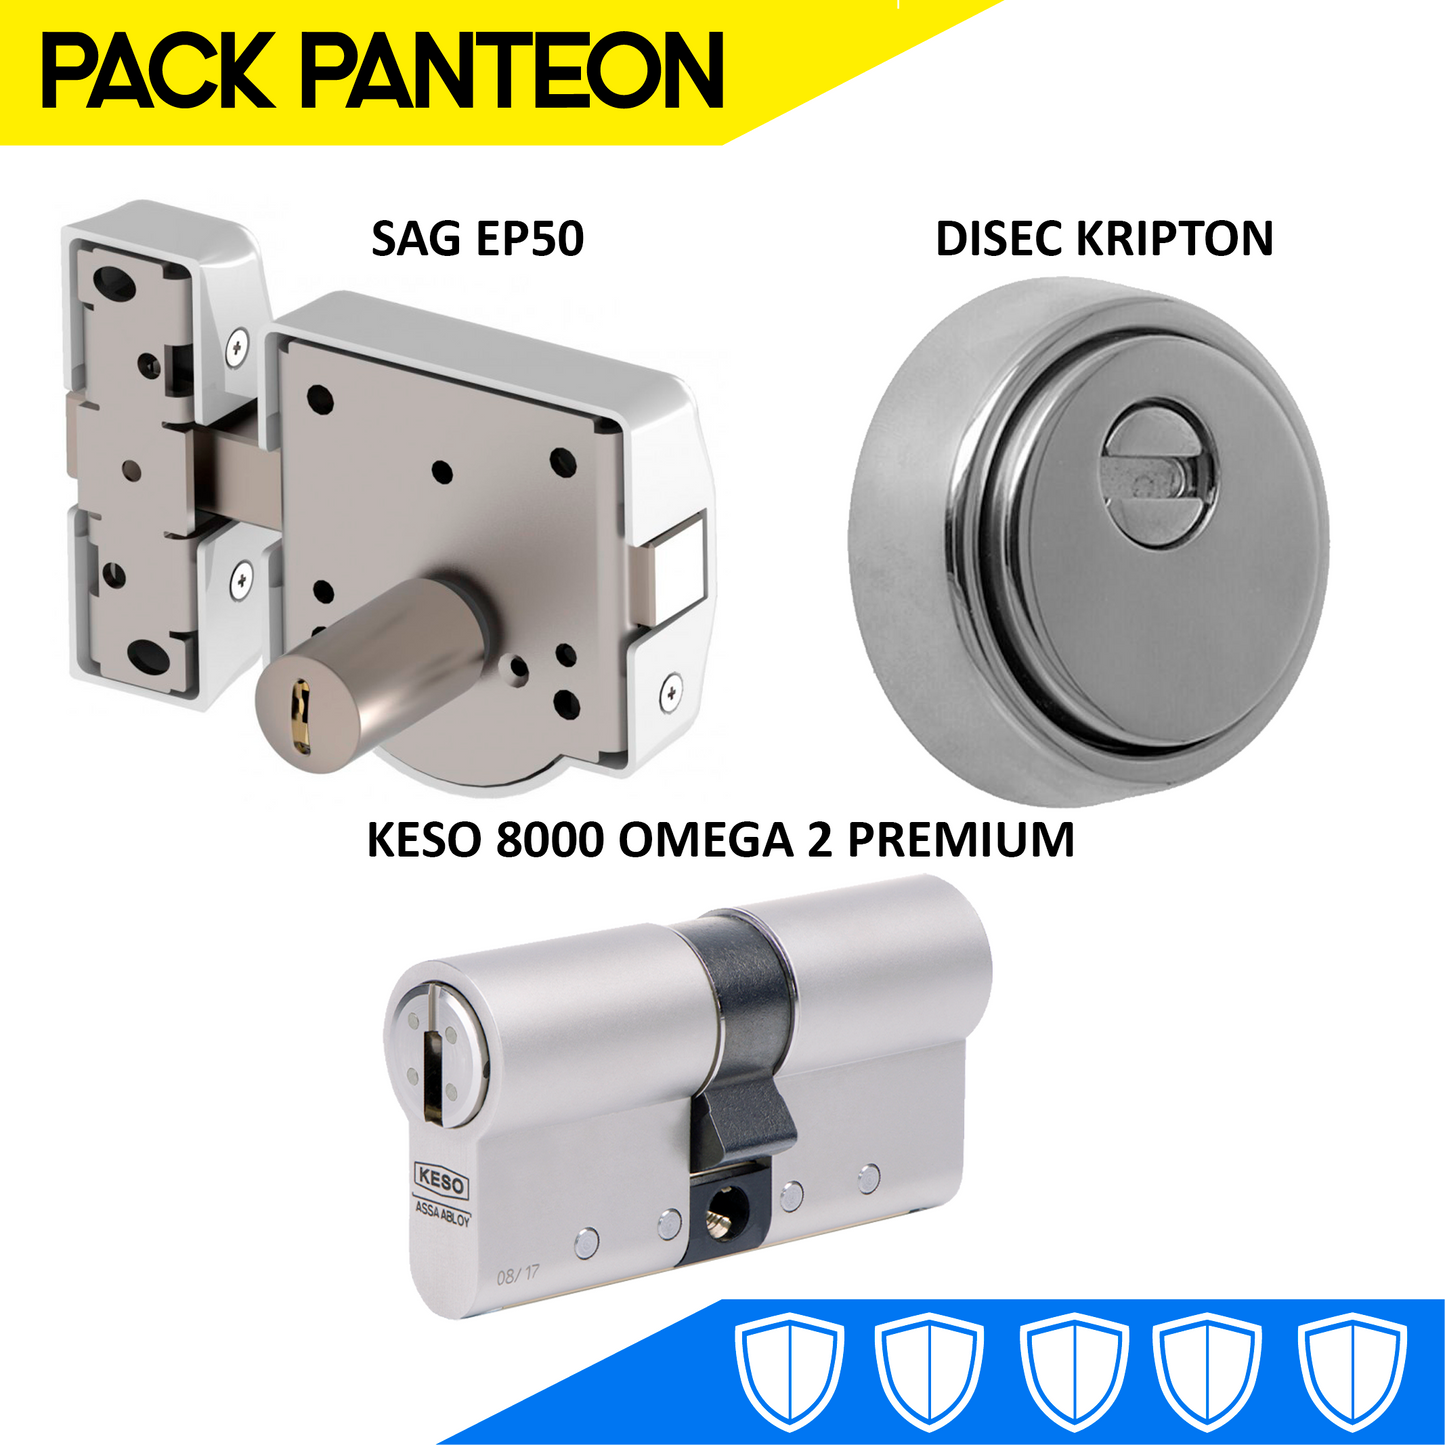 Pack de seguridad Panteón (SAG EP50 + Keso Premium + Disec Kripton)